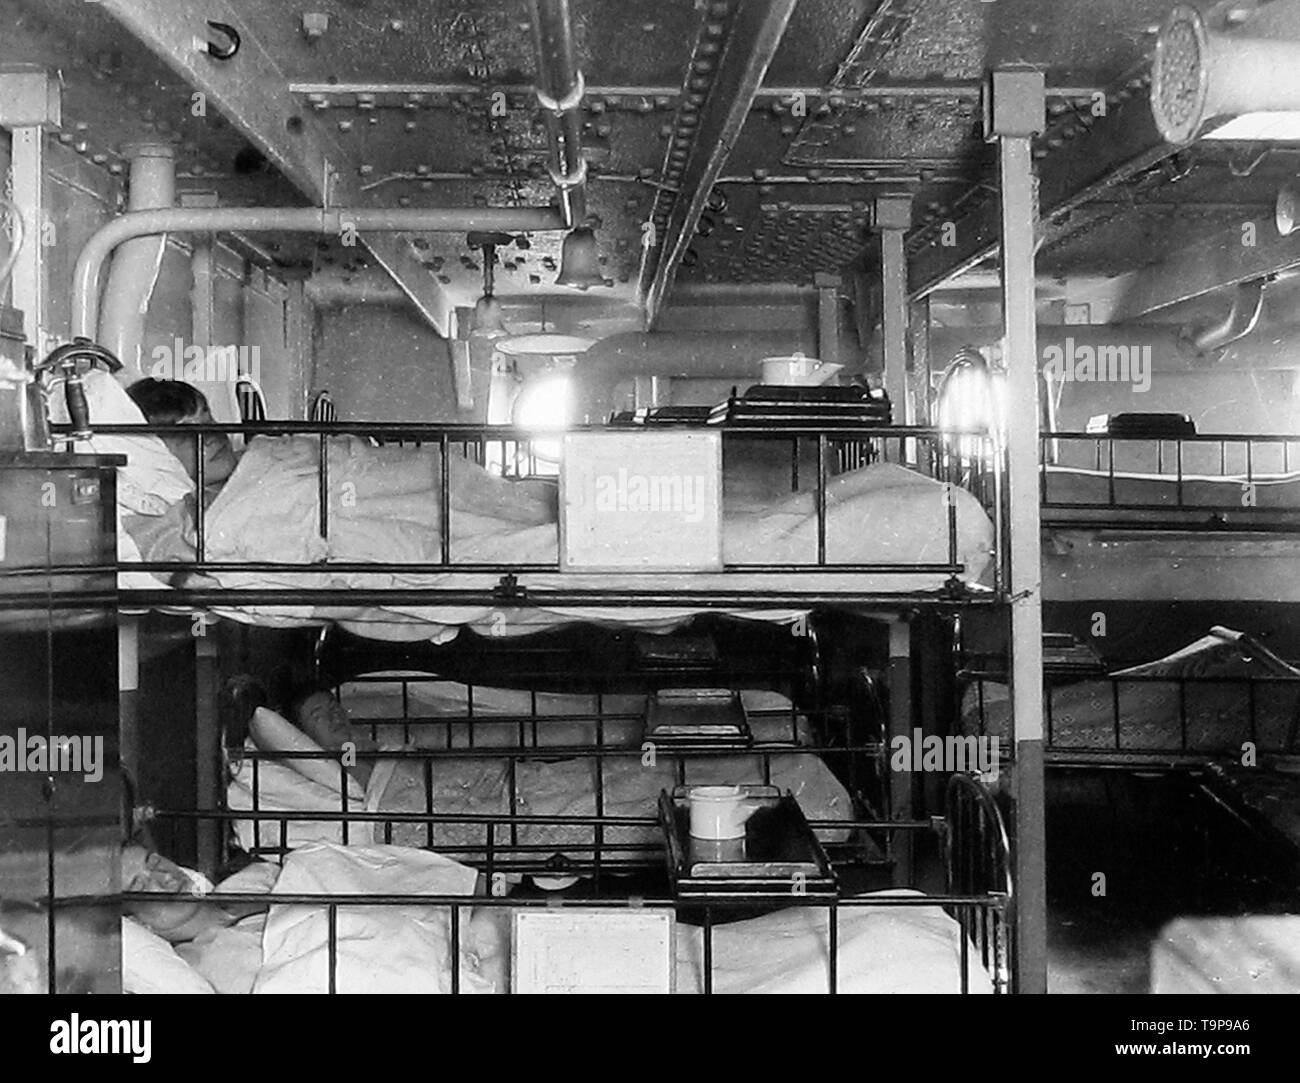 Royal Navy crew quarters on a battleship Stock Photo